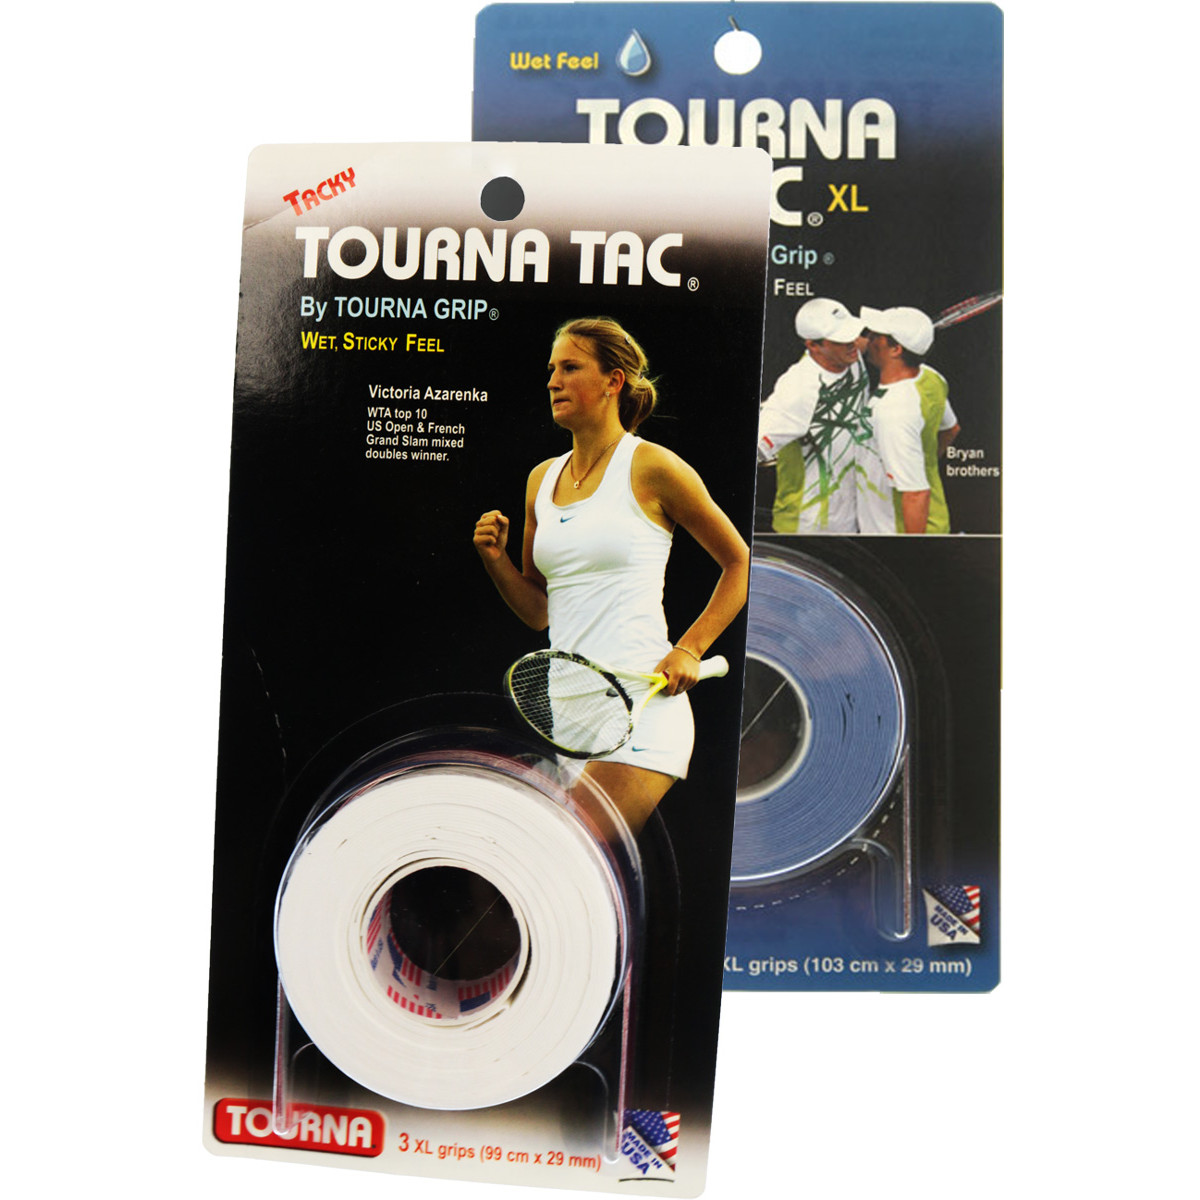 Surgrip Tourna Tac XL Blanc